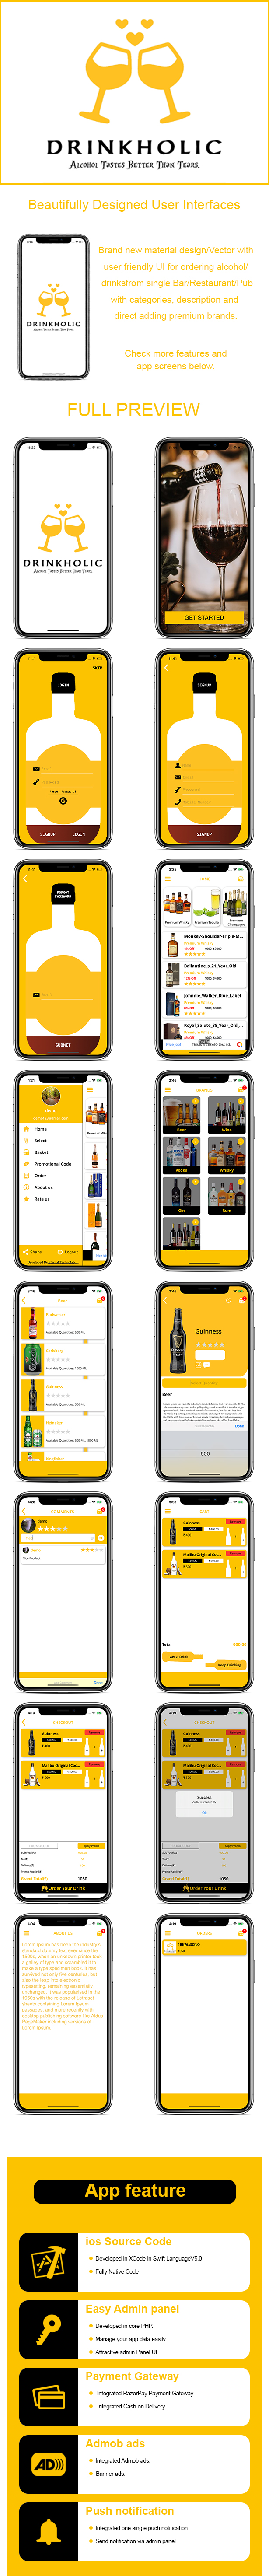 Drinkholic(iOS) - A Single Restaurant/Pub/Bar Drinks ordering app. - 2